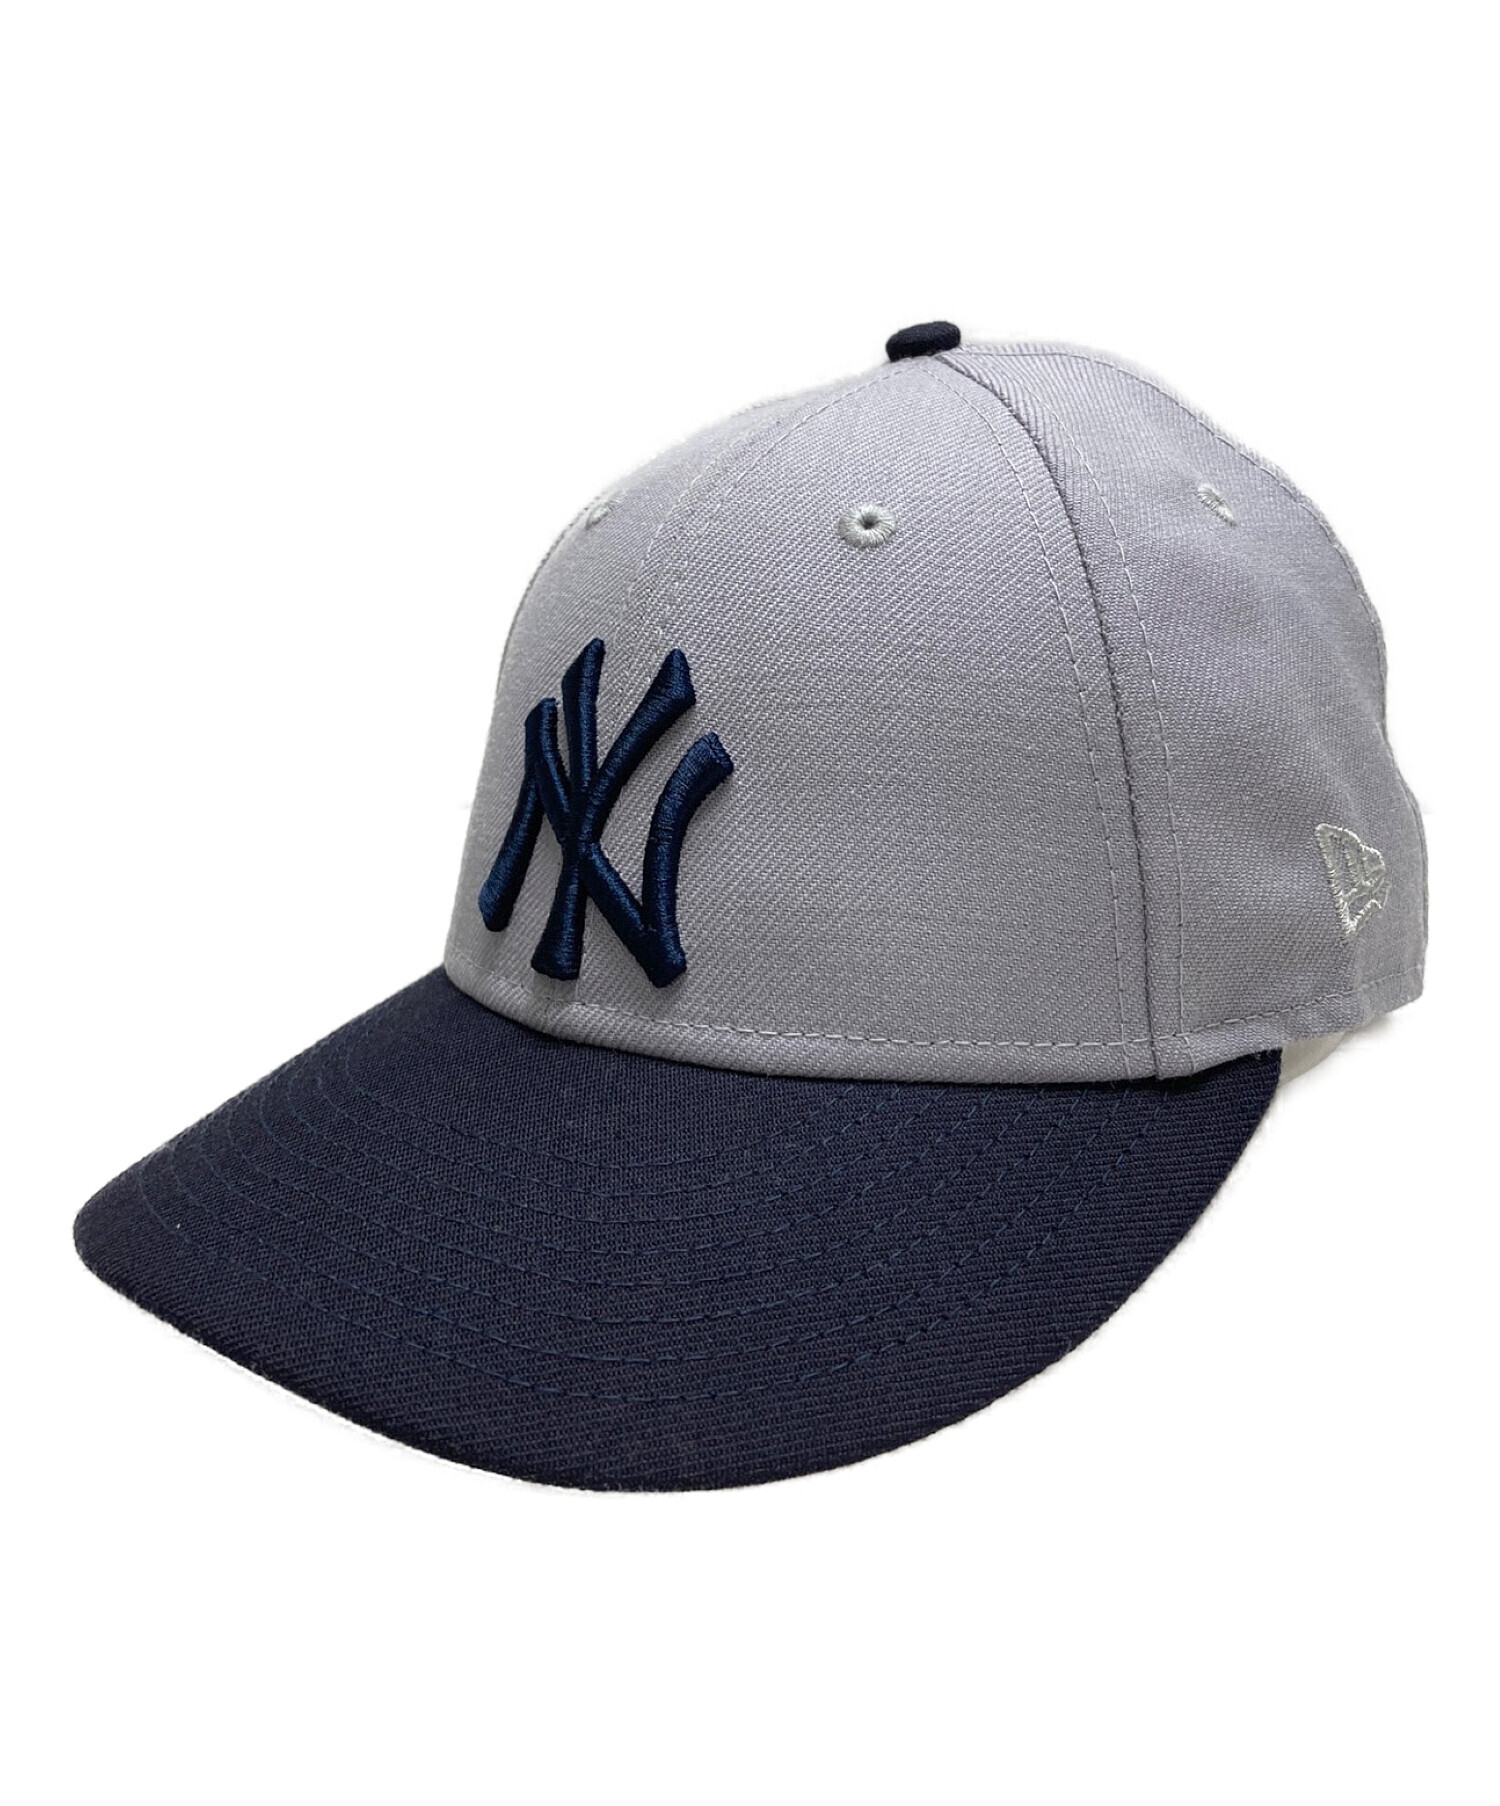 AIME LEON DORE/Yankees Hat/キャップ/7 1/8/ウール/BLK - 帽子